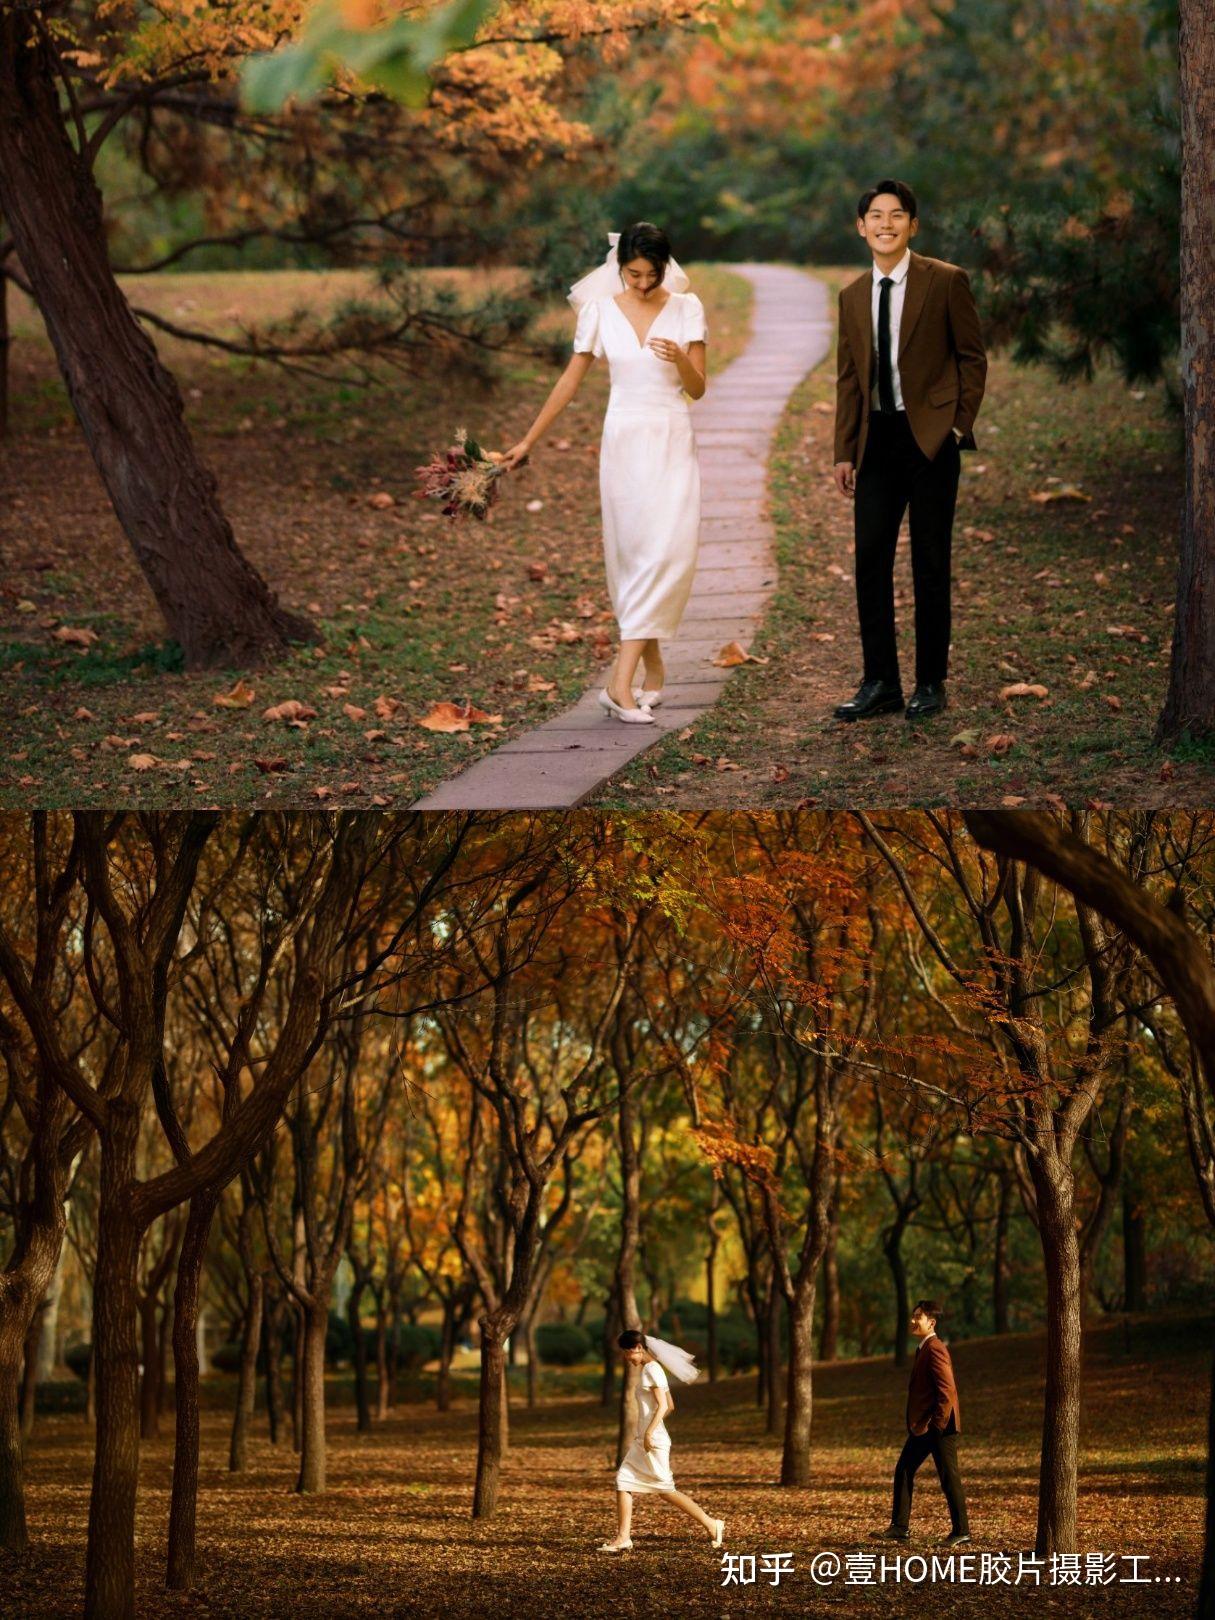 TL WEDDING | 【TLwedding悉尼婚纱摄影】/秋天限定婚纱照/ 🍁秋色枫叶🍁